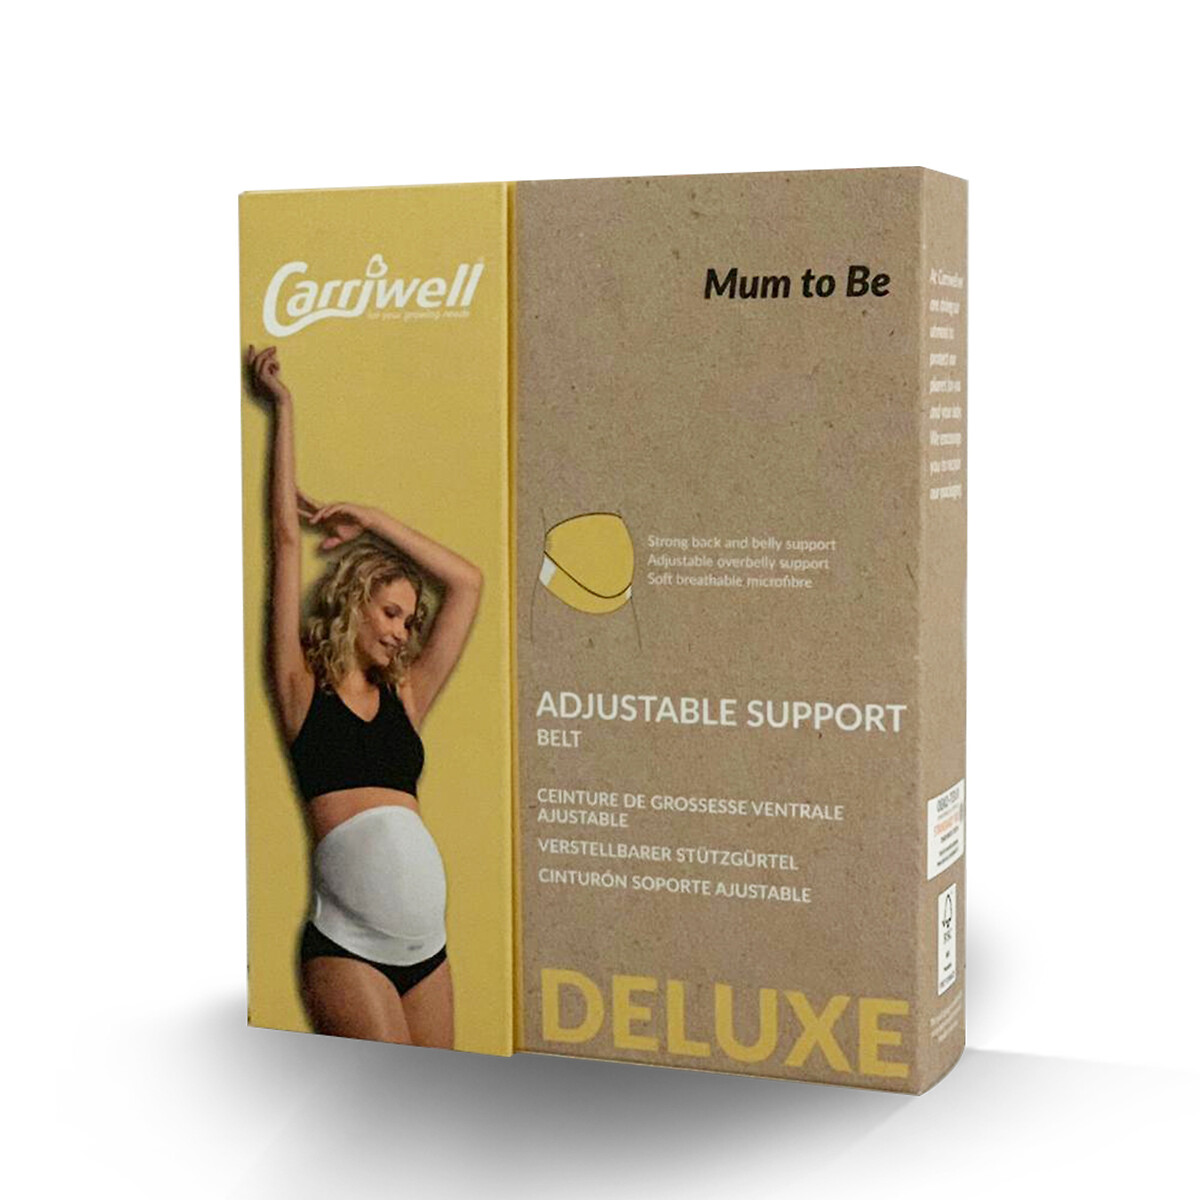 Maternity support belt, honey, Carriwell